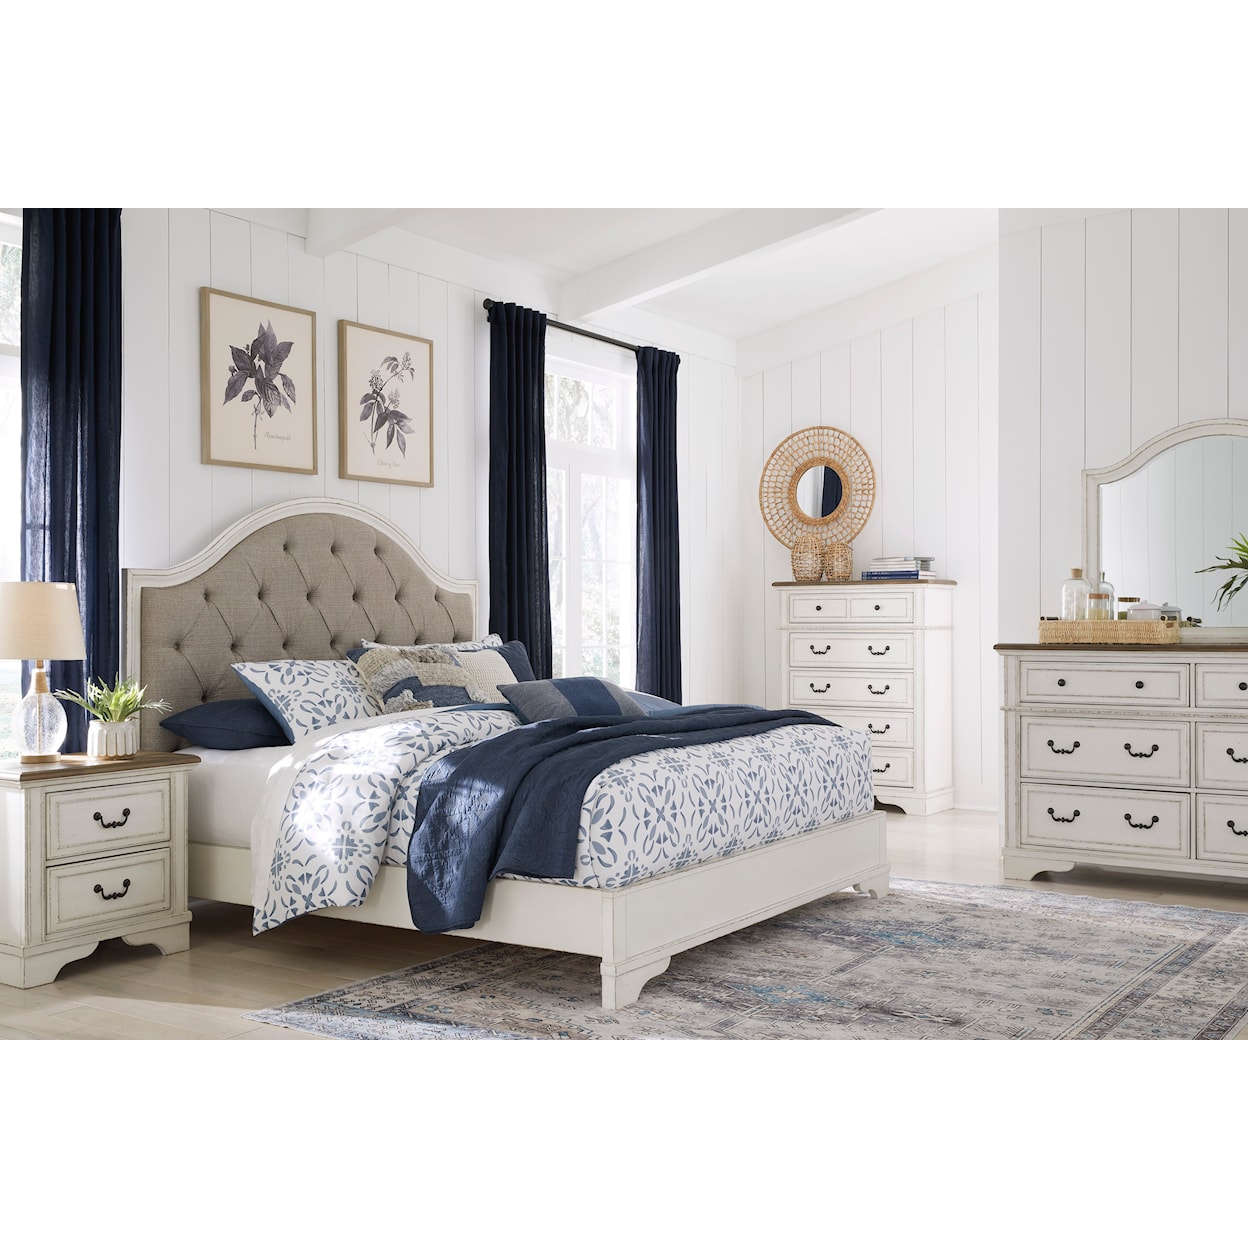 Signature Design by Ashley Furniture Brollyn King Bedroom Set